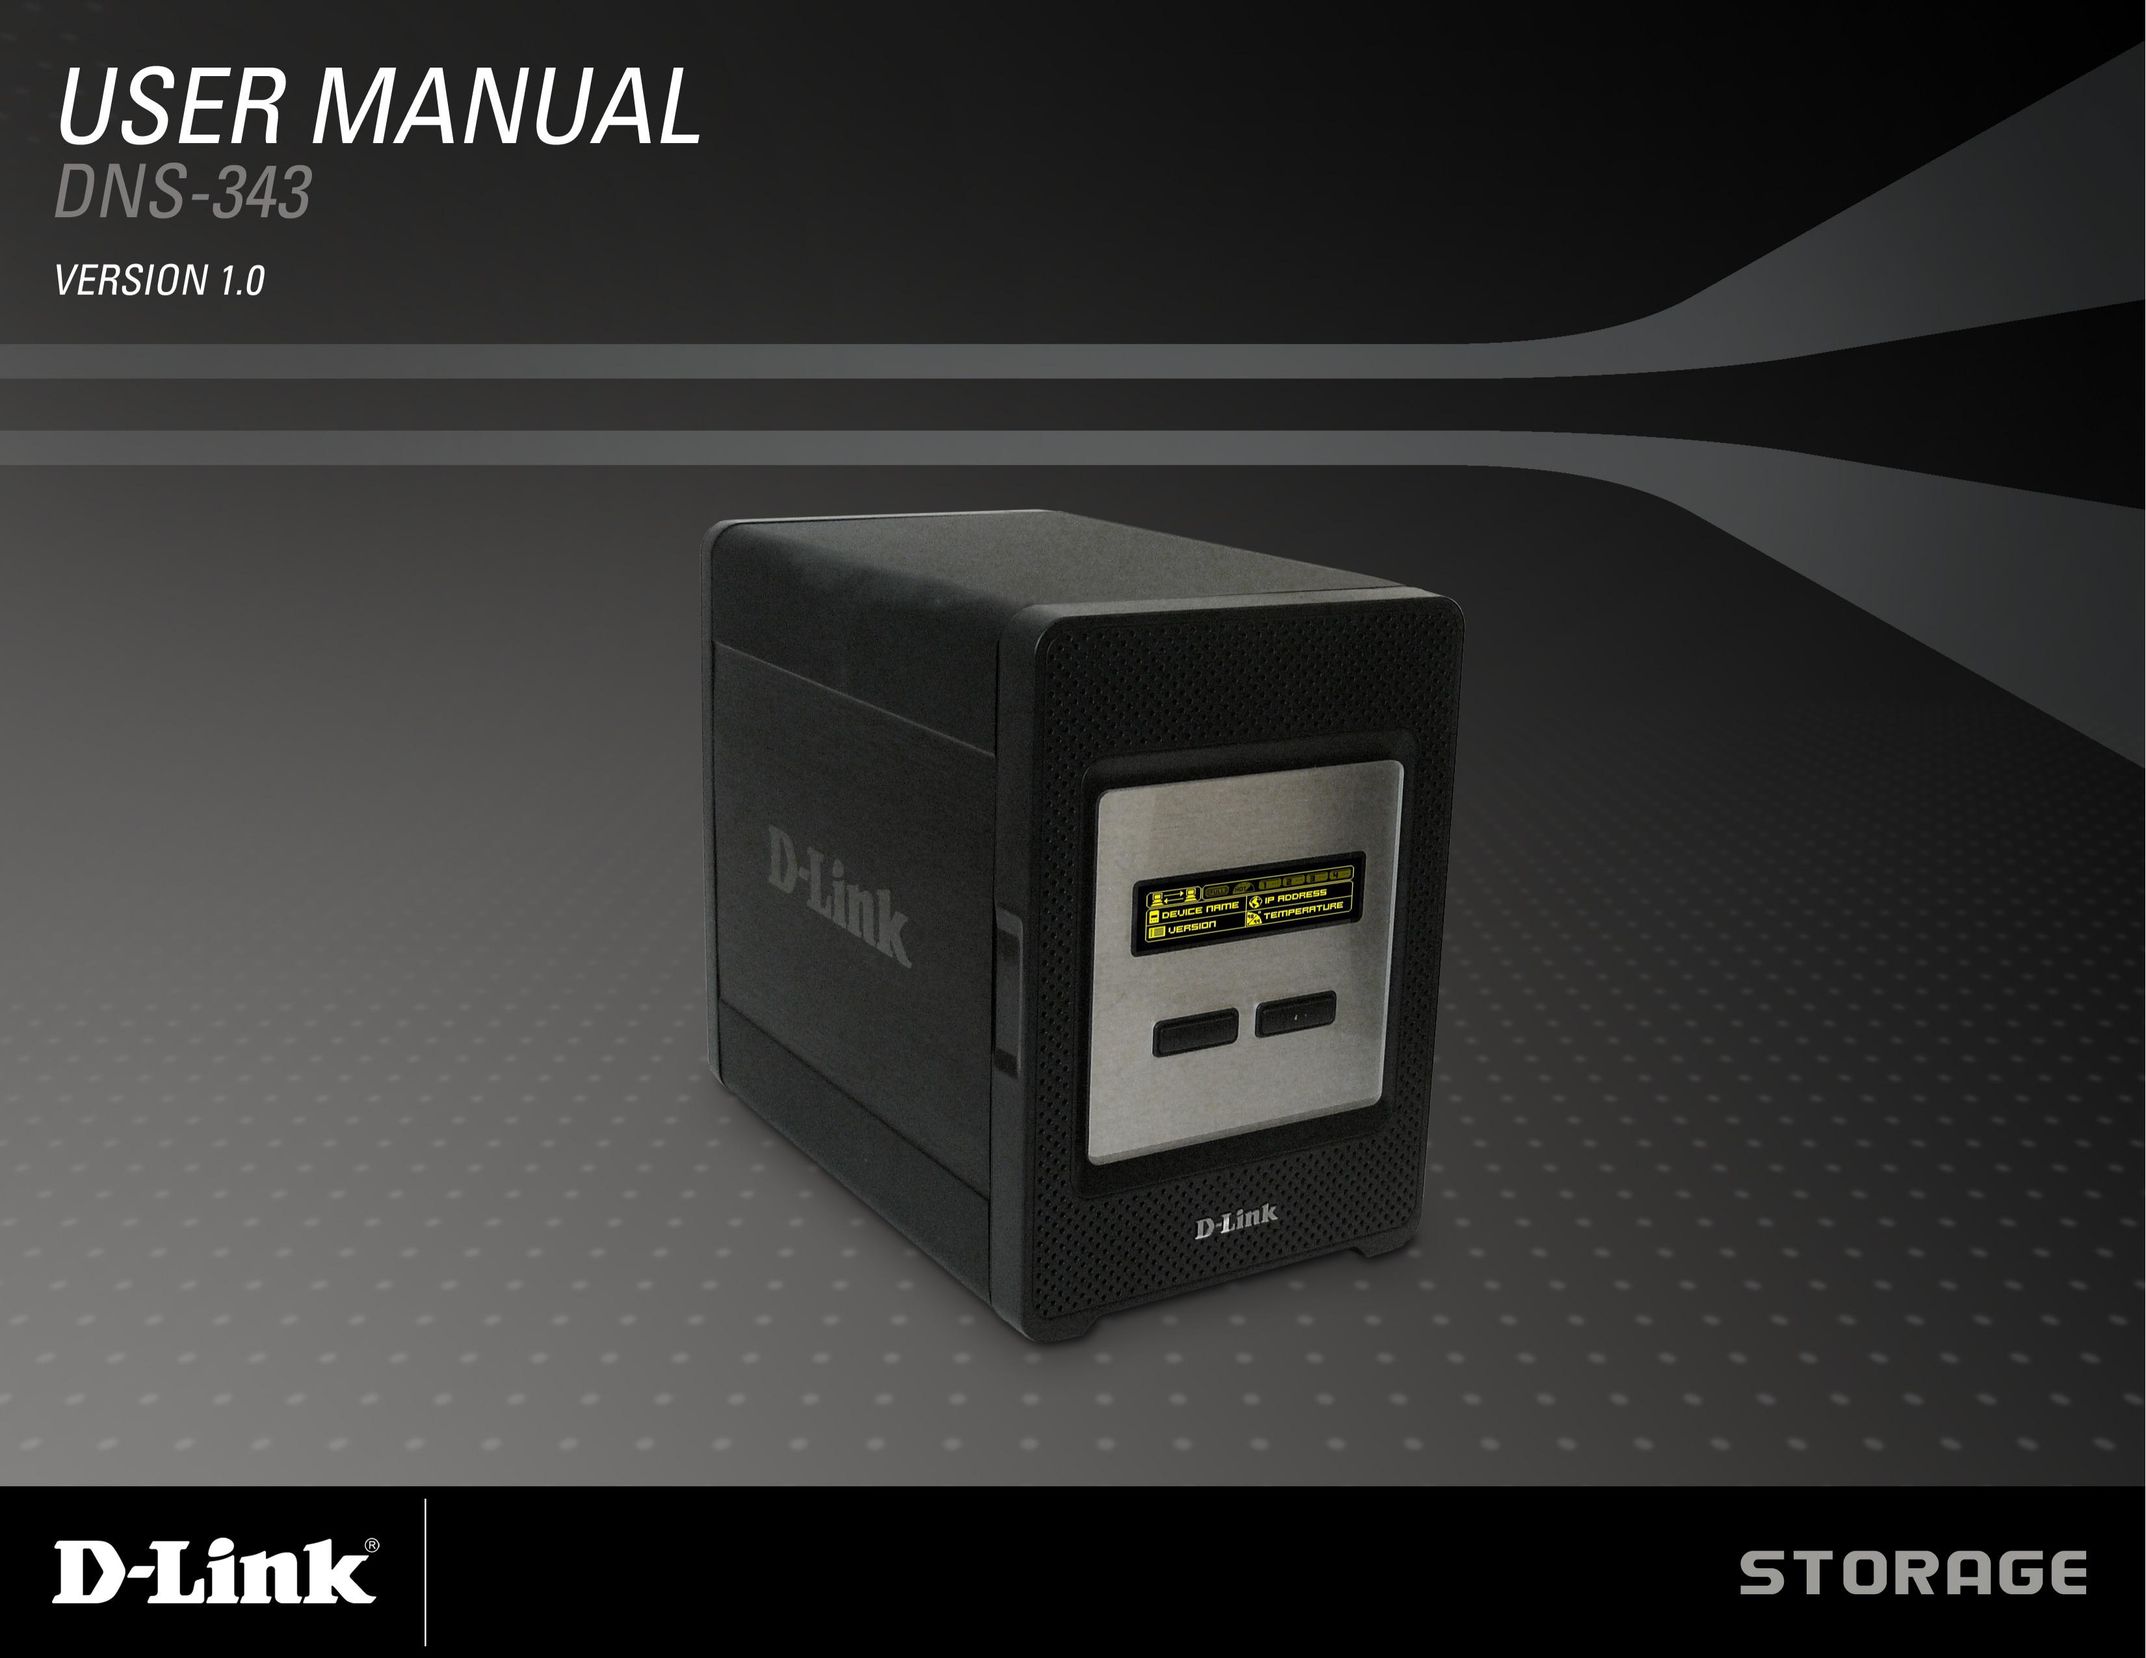 D-Link DNS-343 Tool Storage User Manual